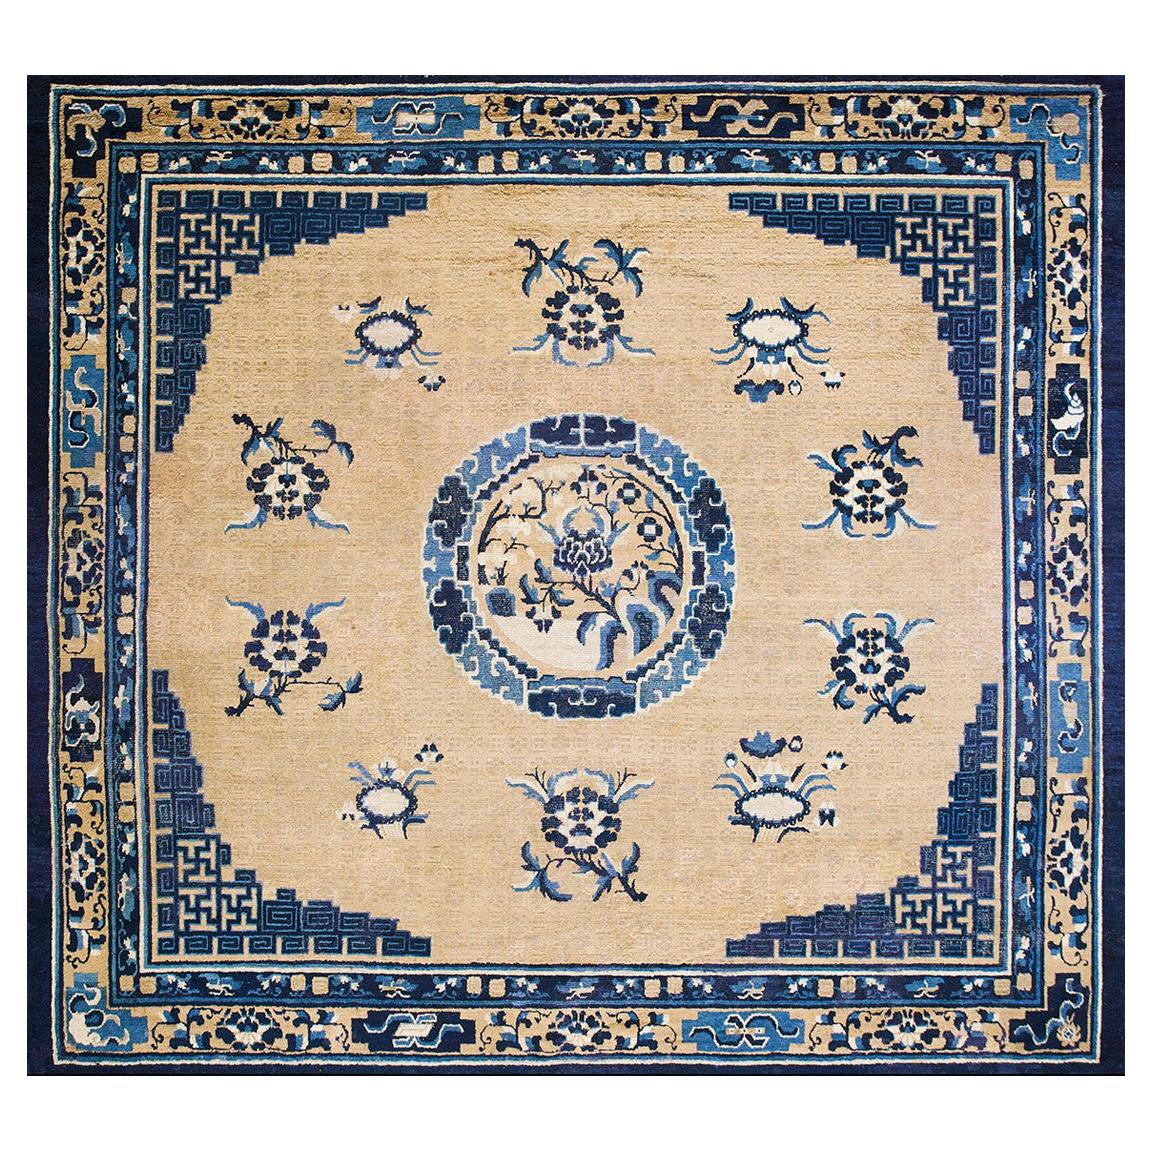 Antique Ningxia Chinese Square Carpet